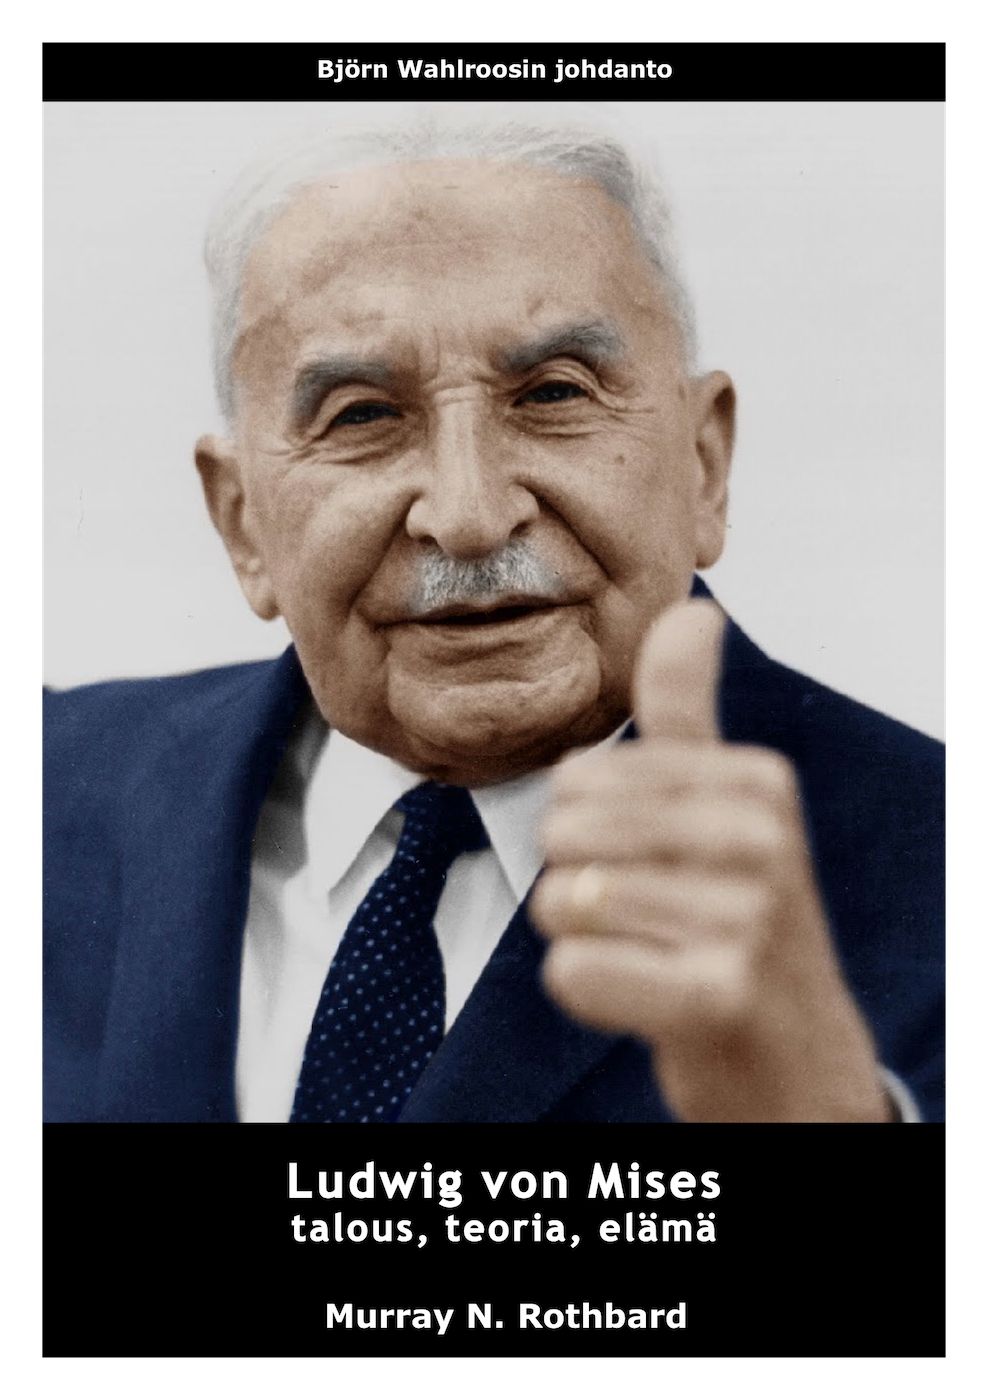 Ludwig von Mises - talous, teoria, elämä, eBook by Murray N. Rothbard